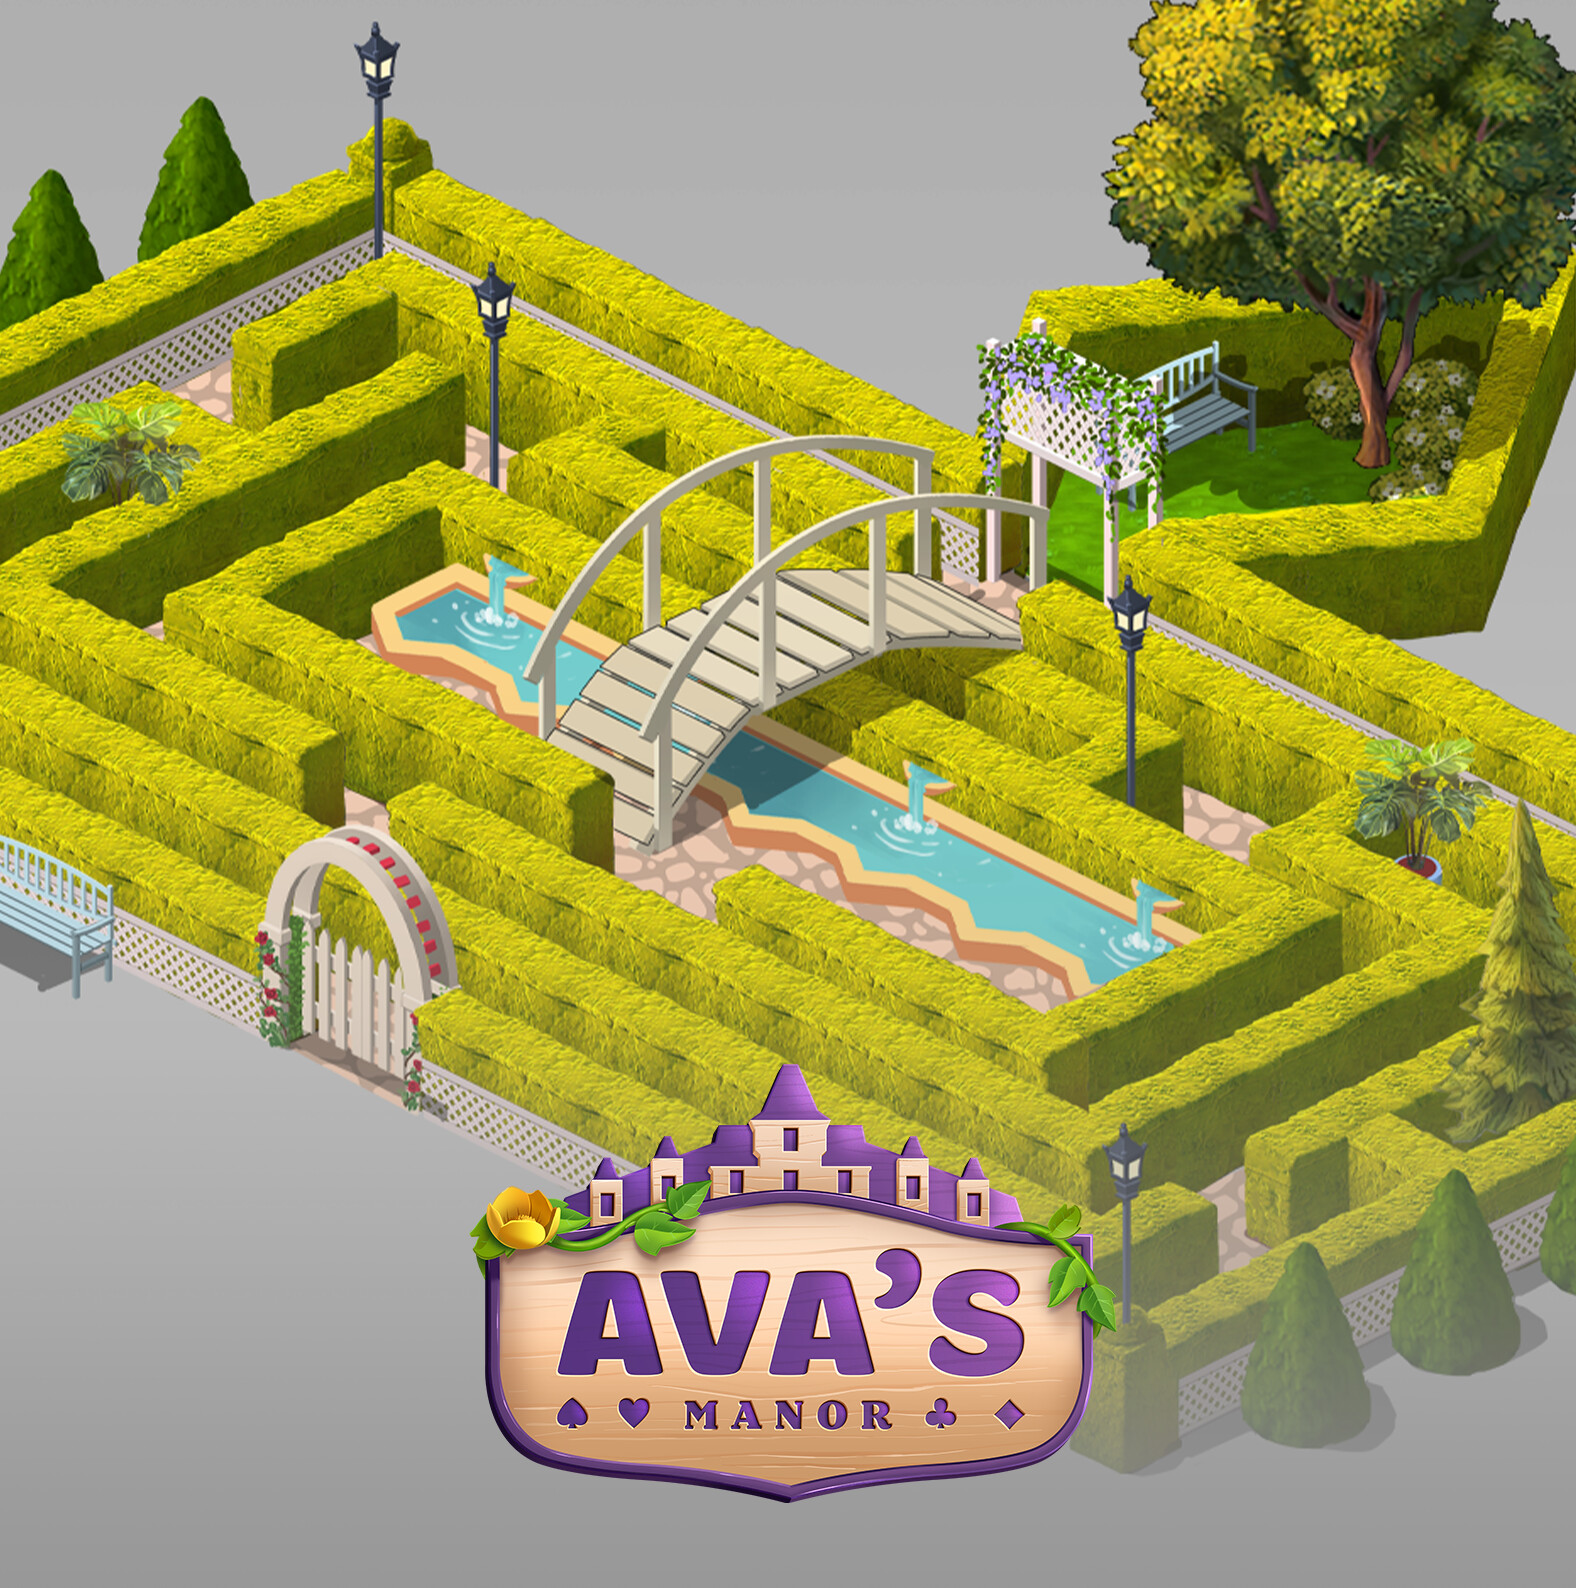 Ava's Manor - Maze Concepts